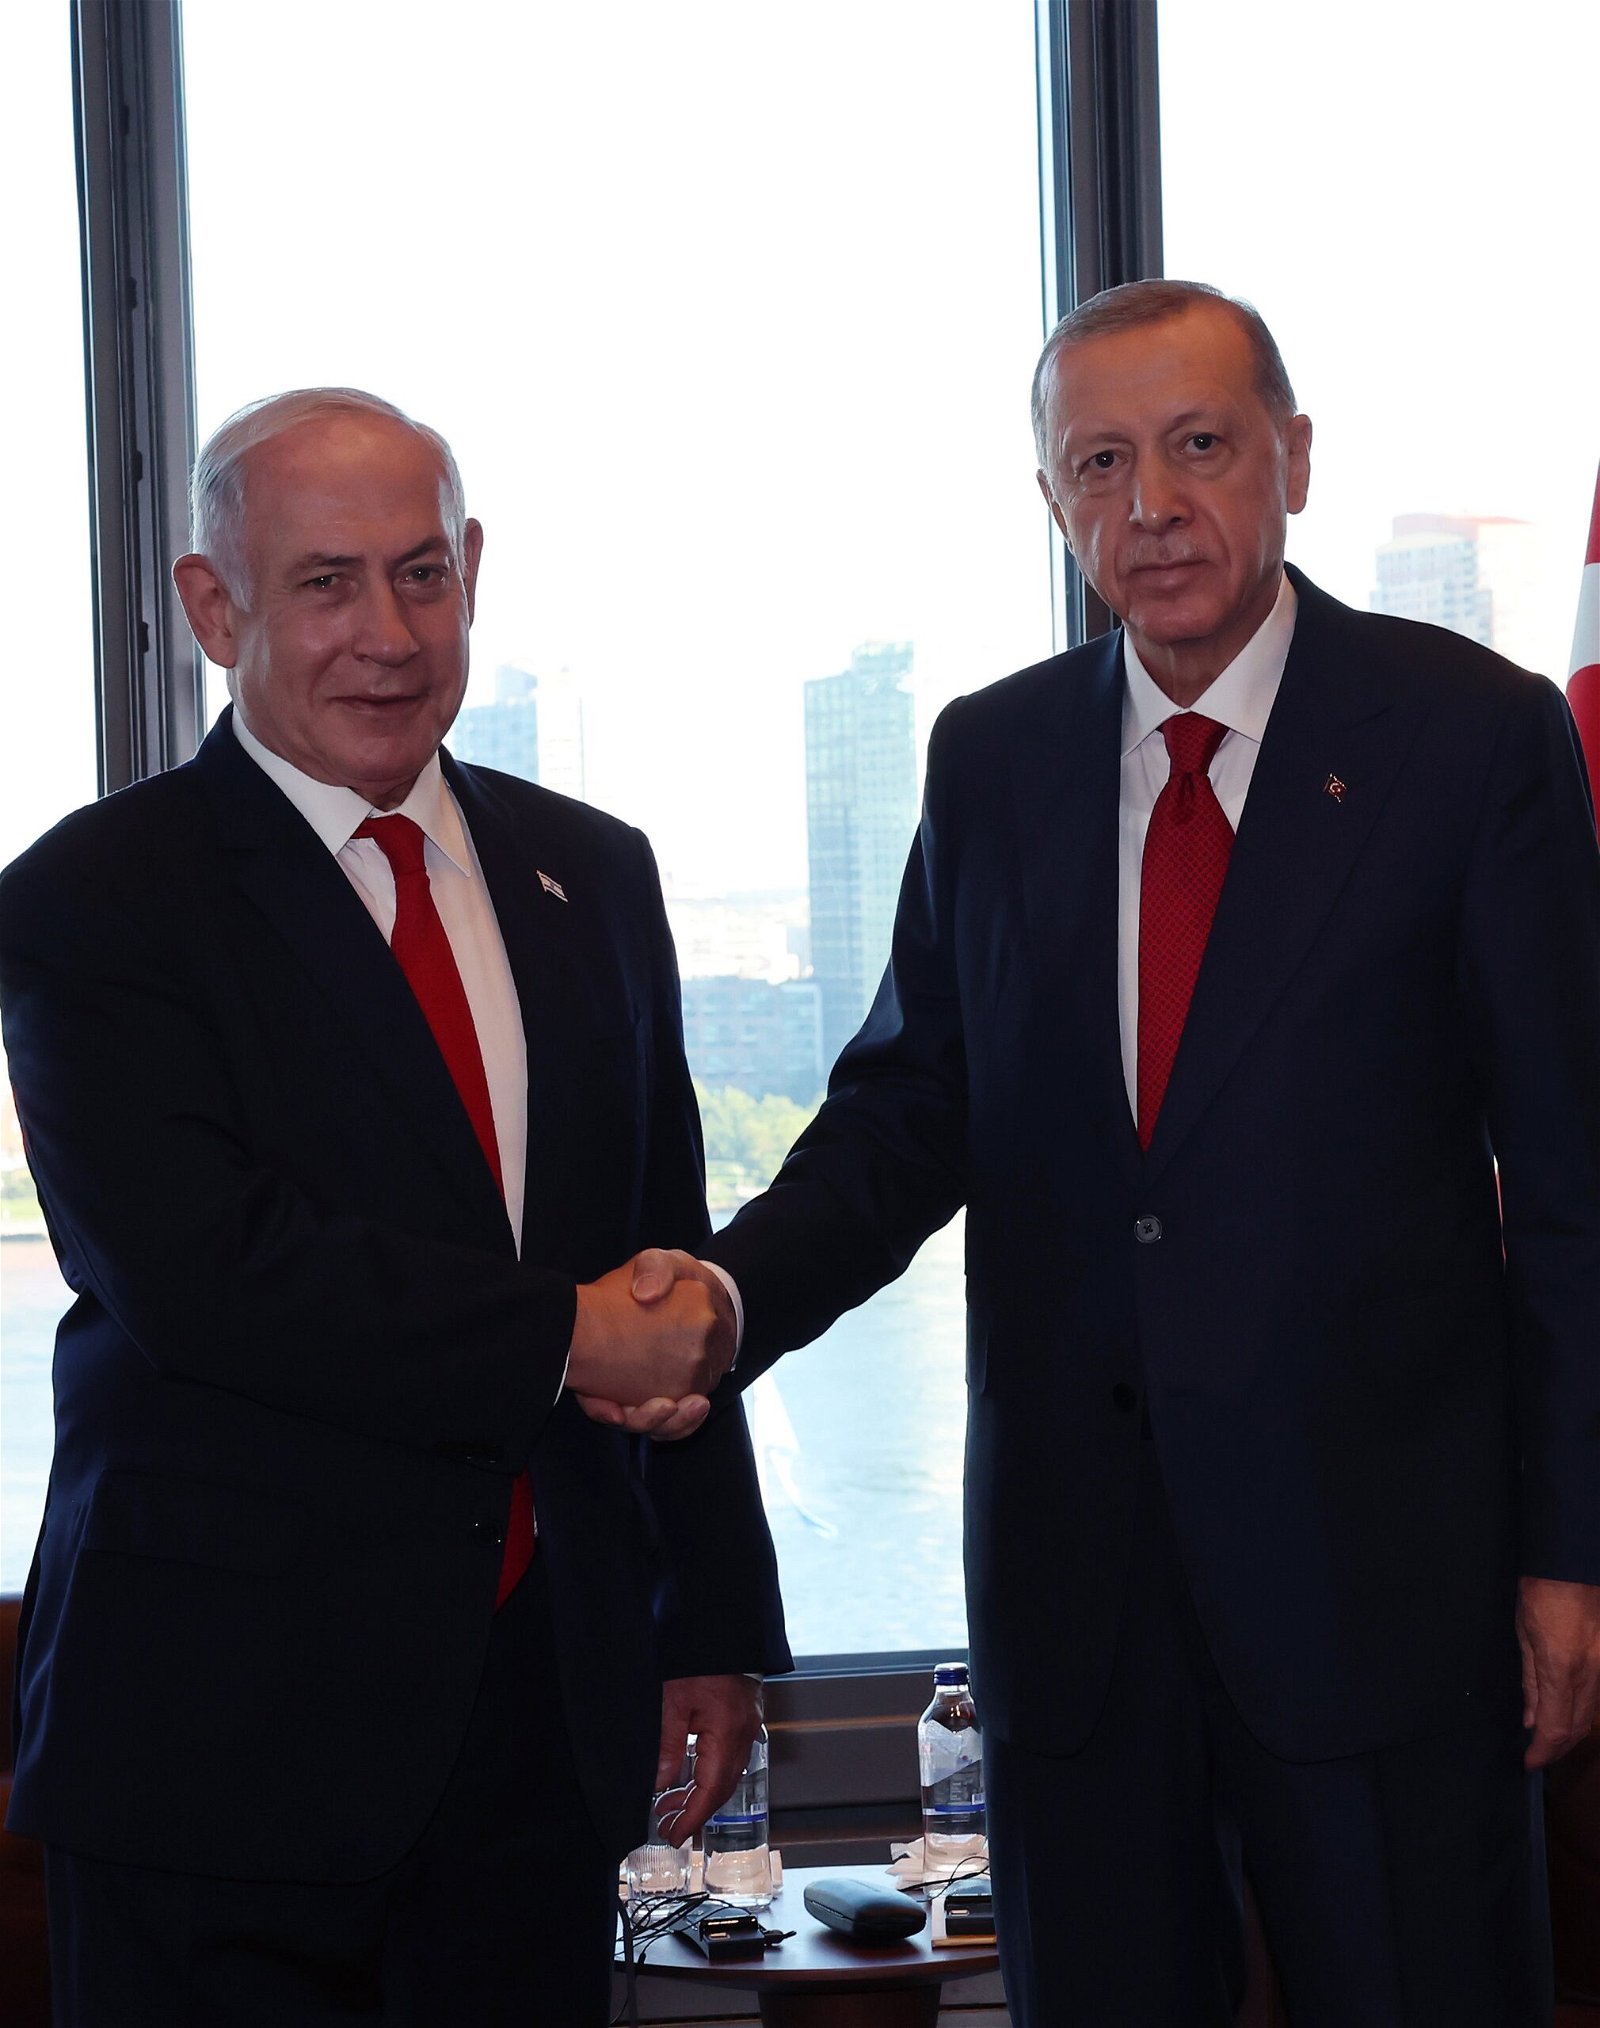 Holocaust deniers Erdogan and Netanyahu shamefully exploit the term genocide to denigrate themselves